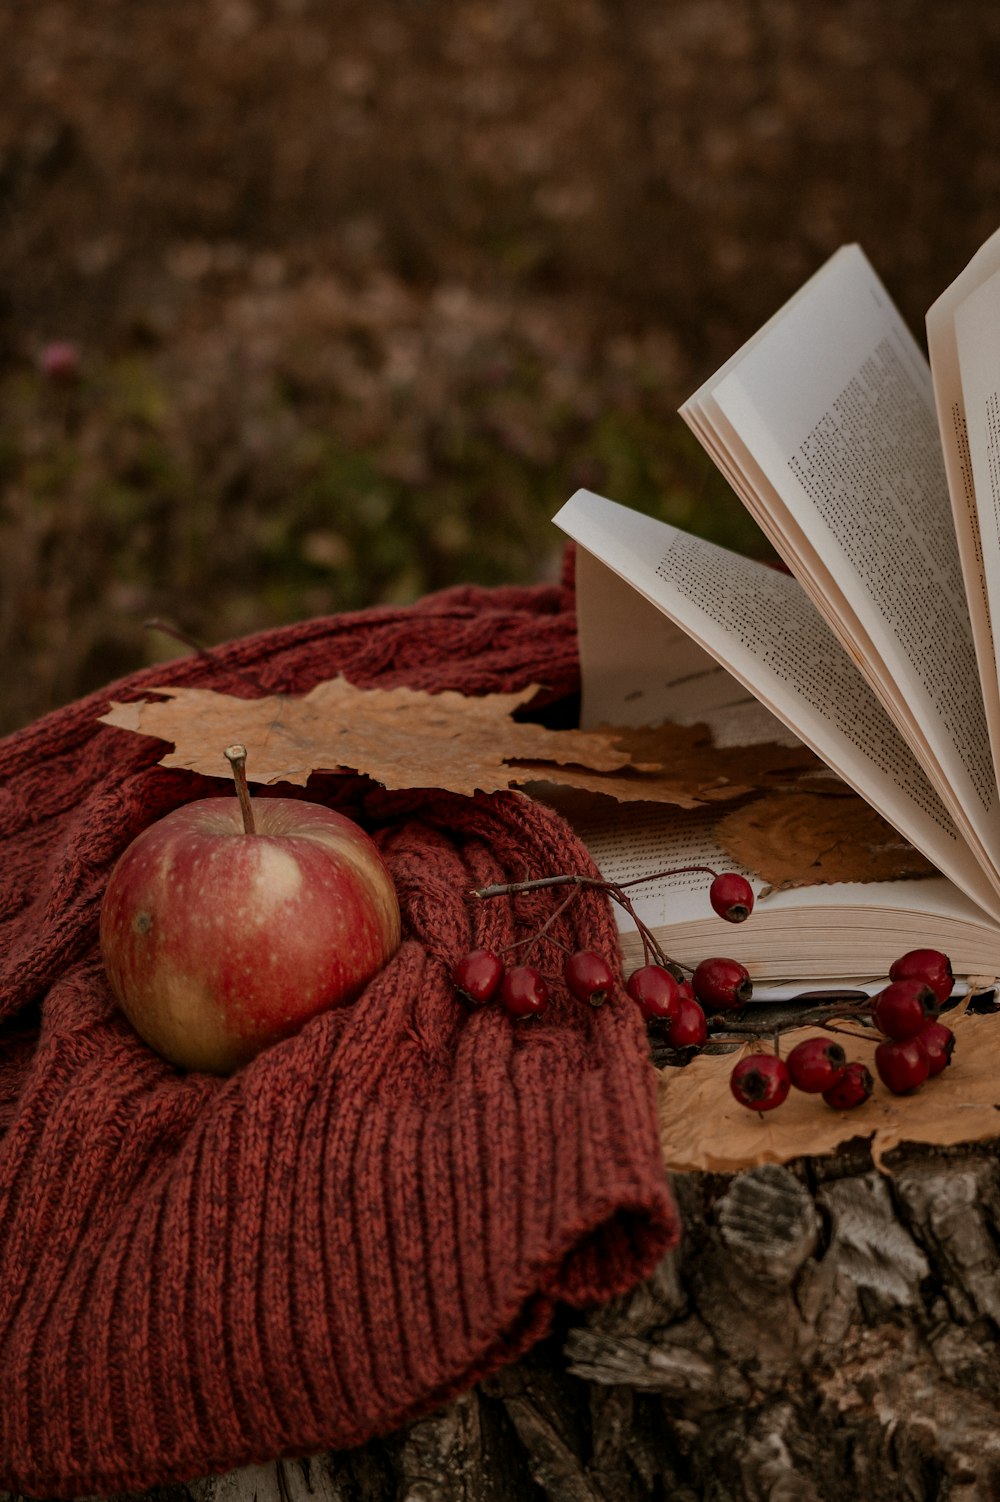 una mela e un libro su un ceppo d'albero